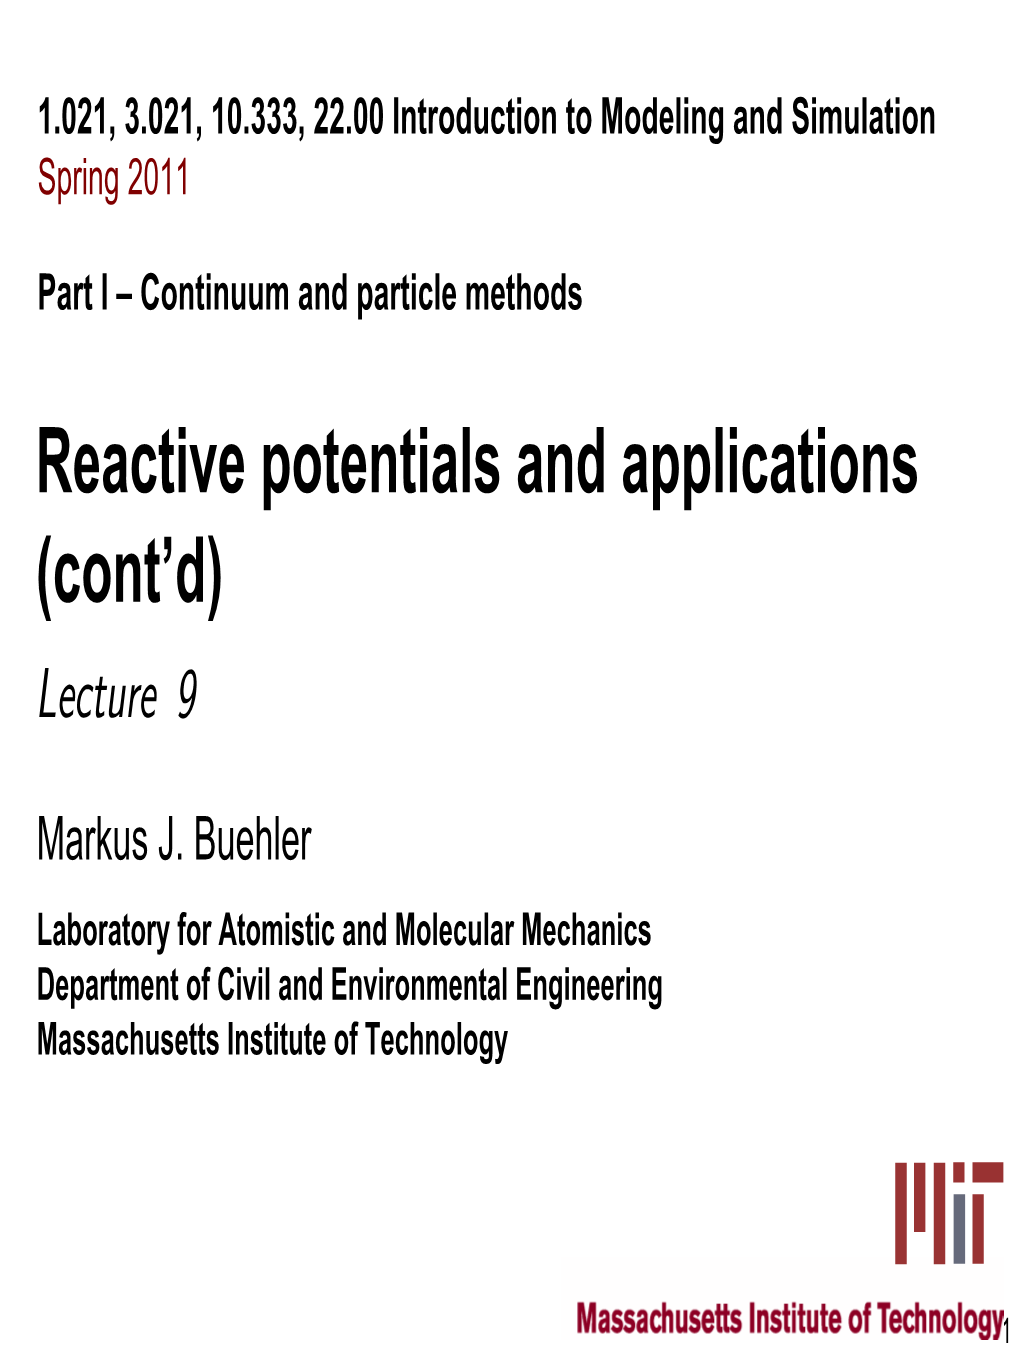 Part I Lecture 9 Reactive Potentials and Applications